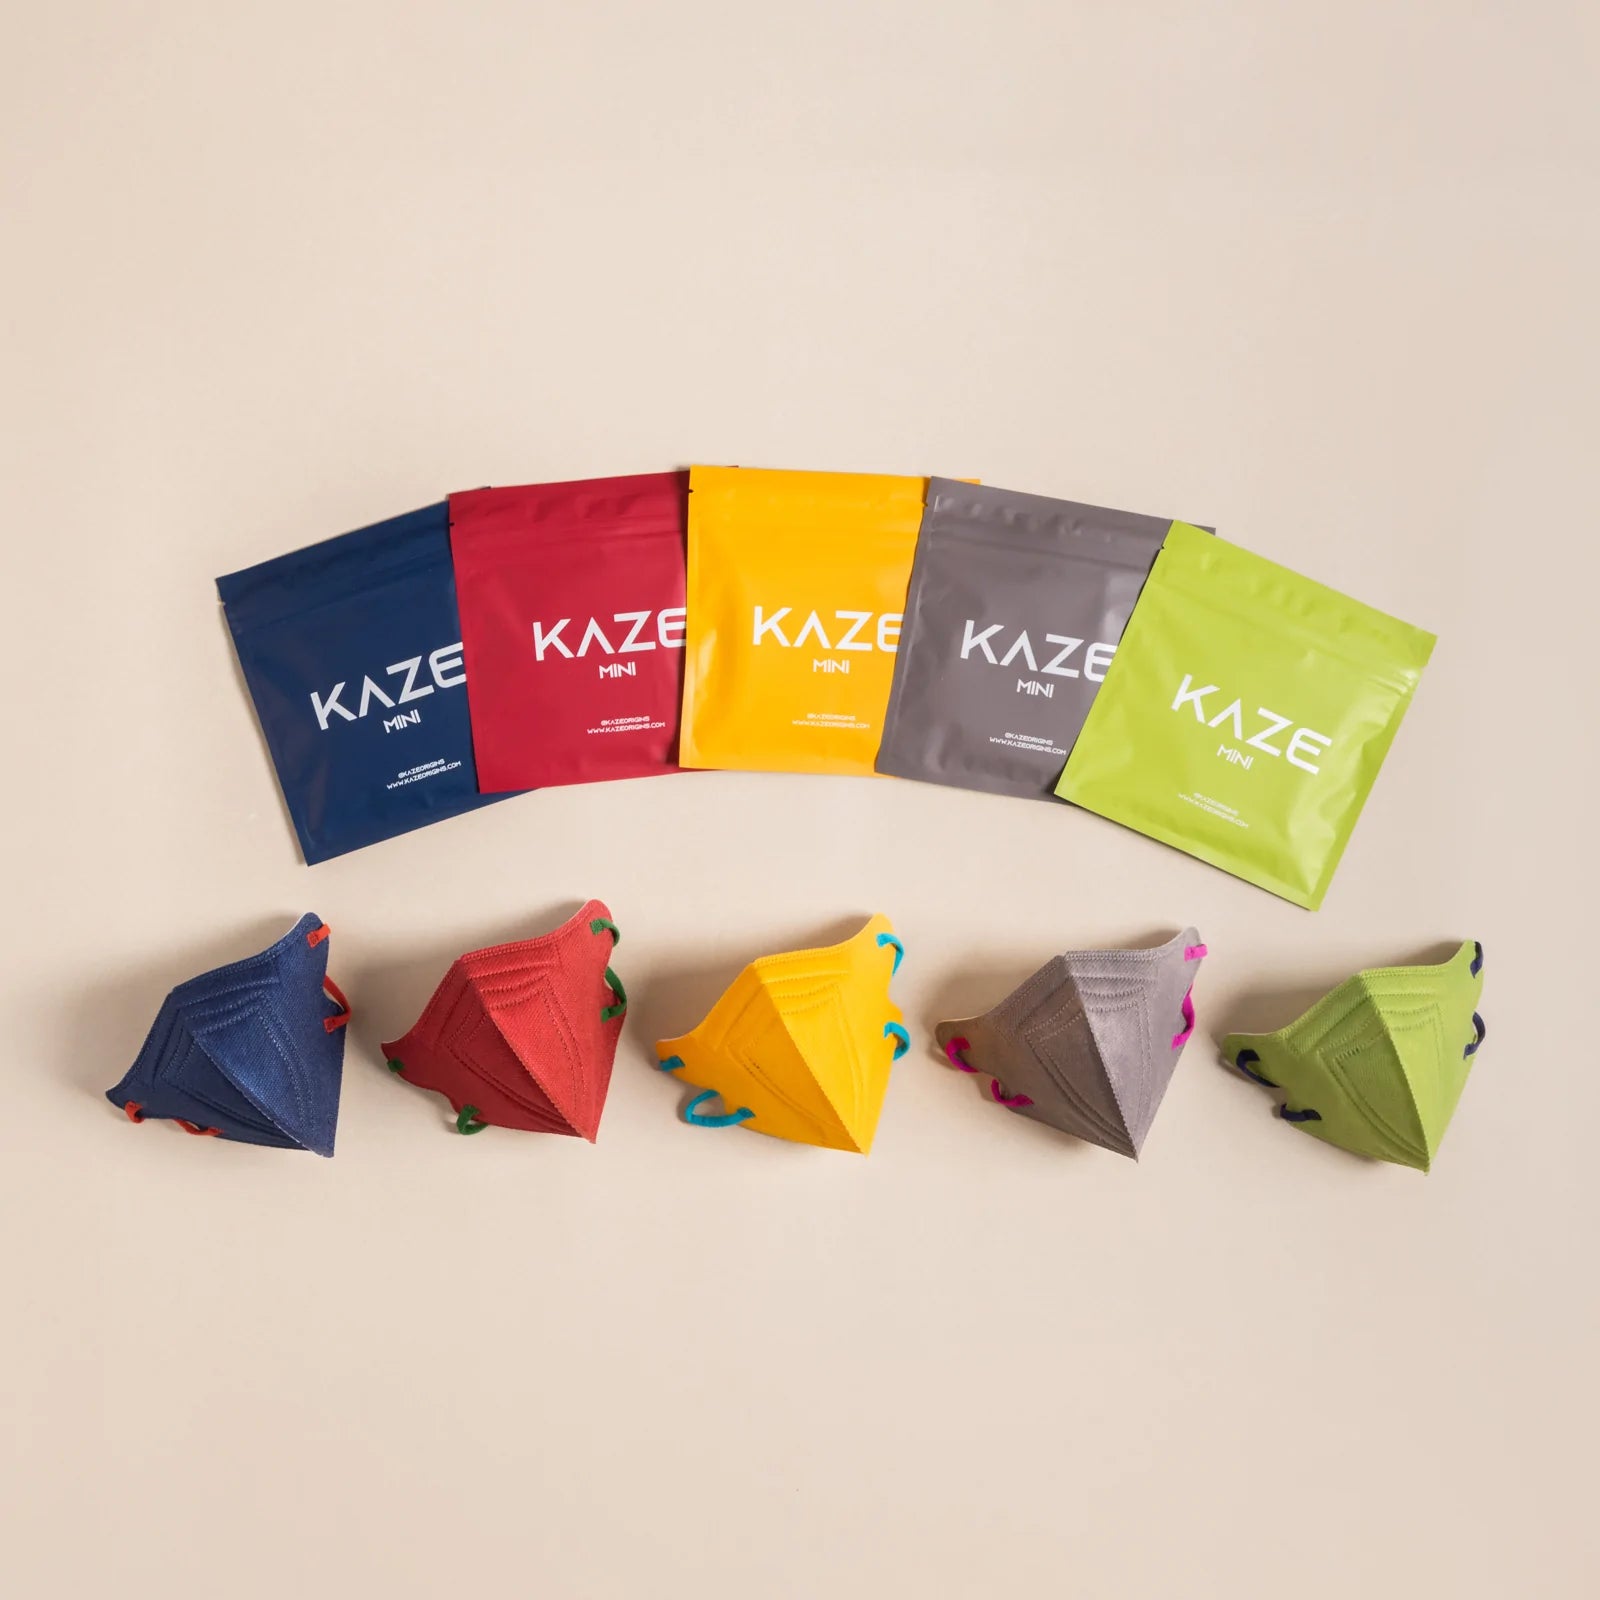 KAZE Masks- Mini Elevate Series